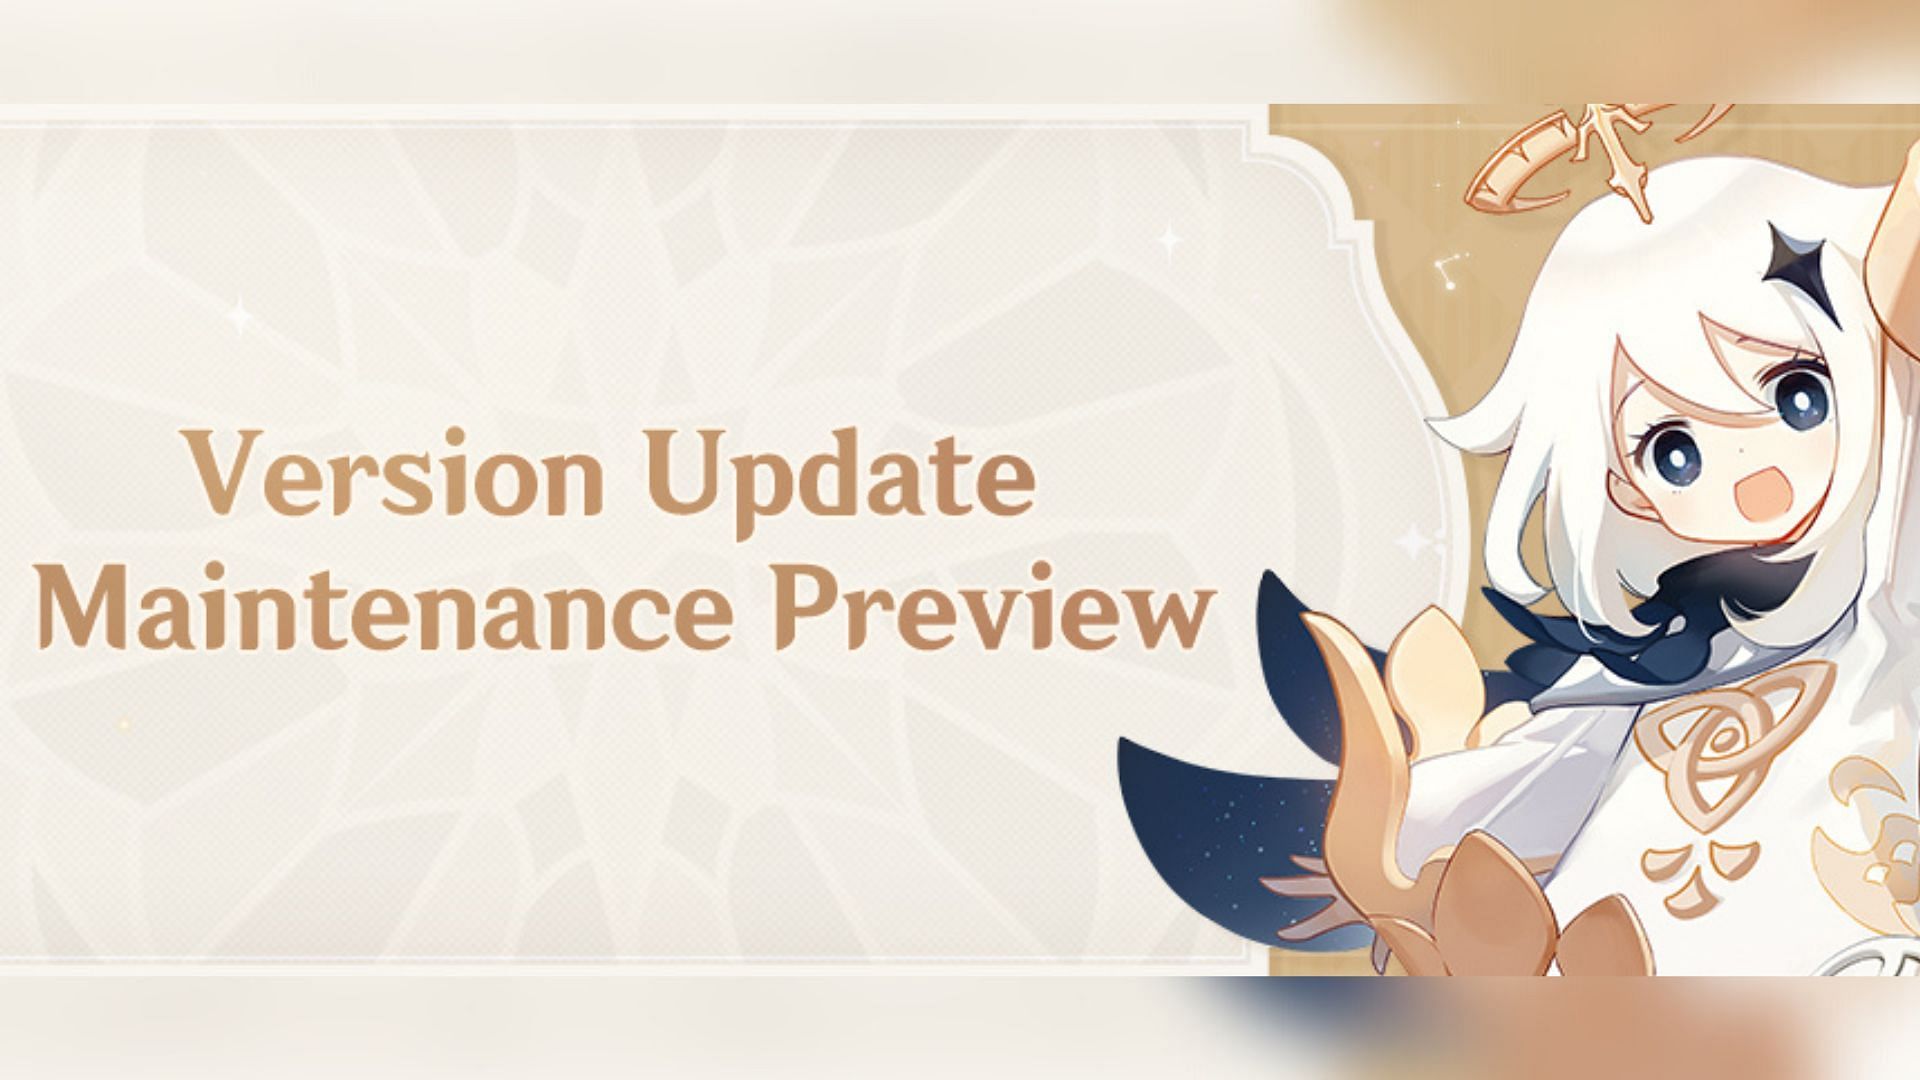 Official details about the 3.0 maintenance (Image via Genshin Impact)